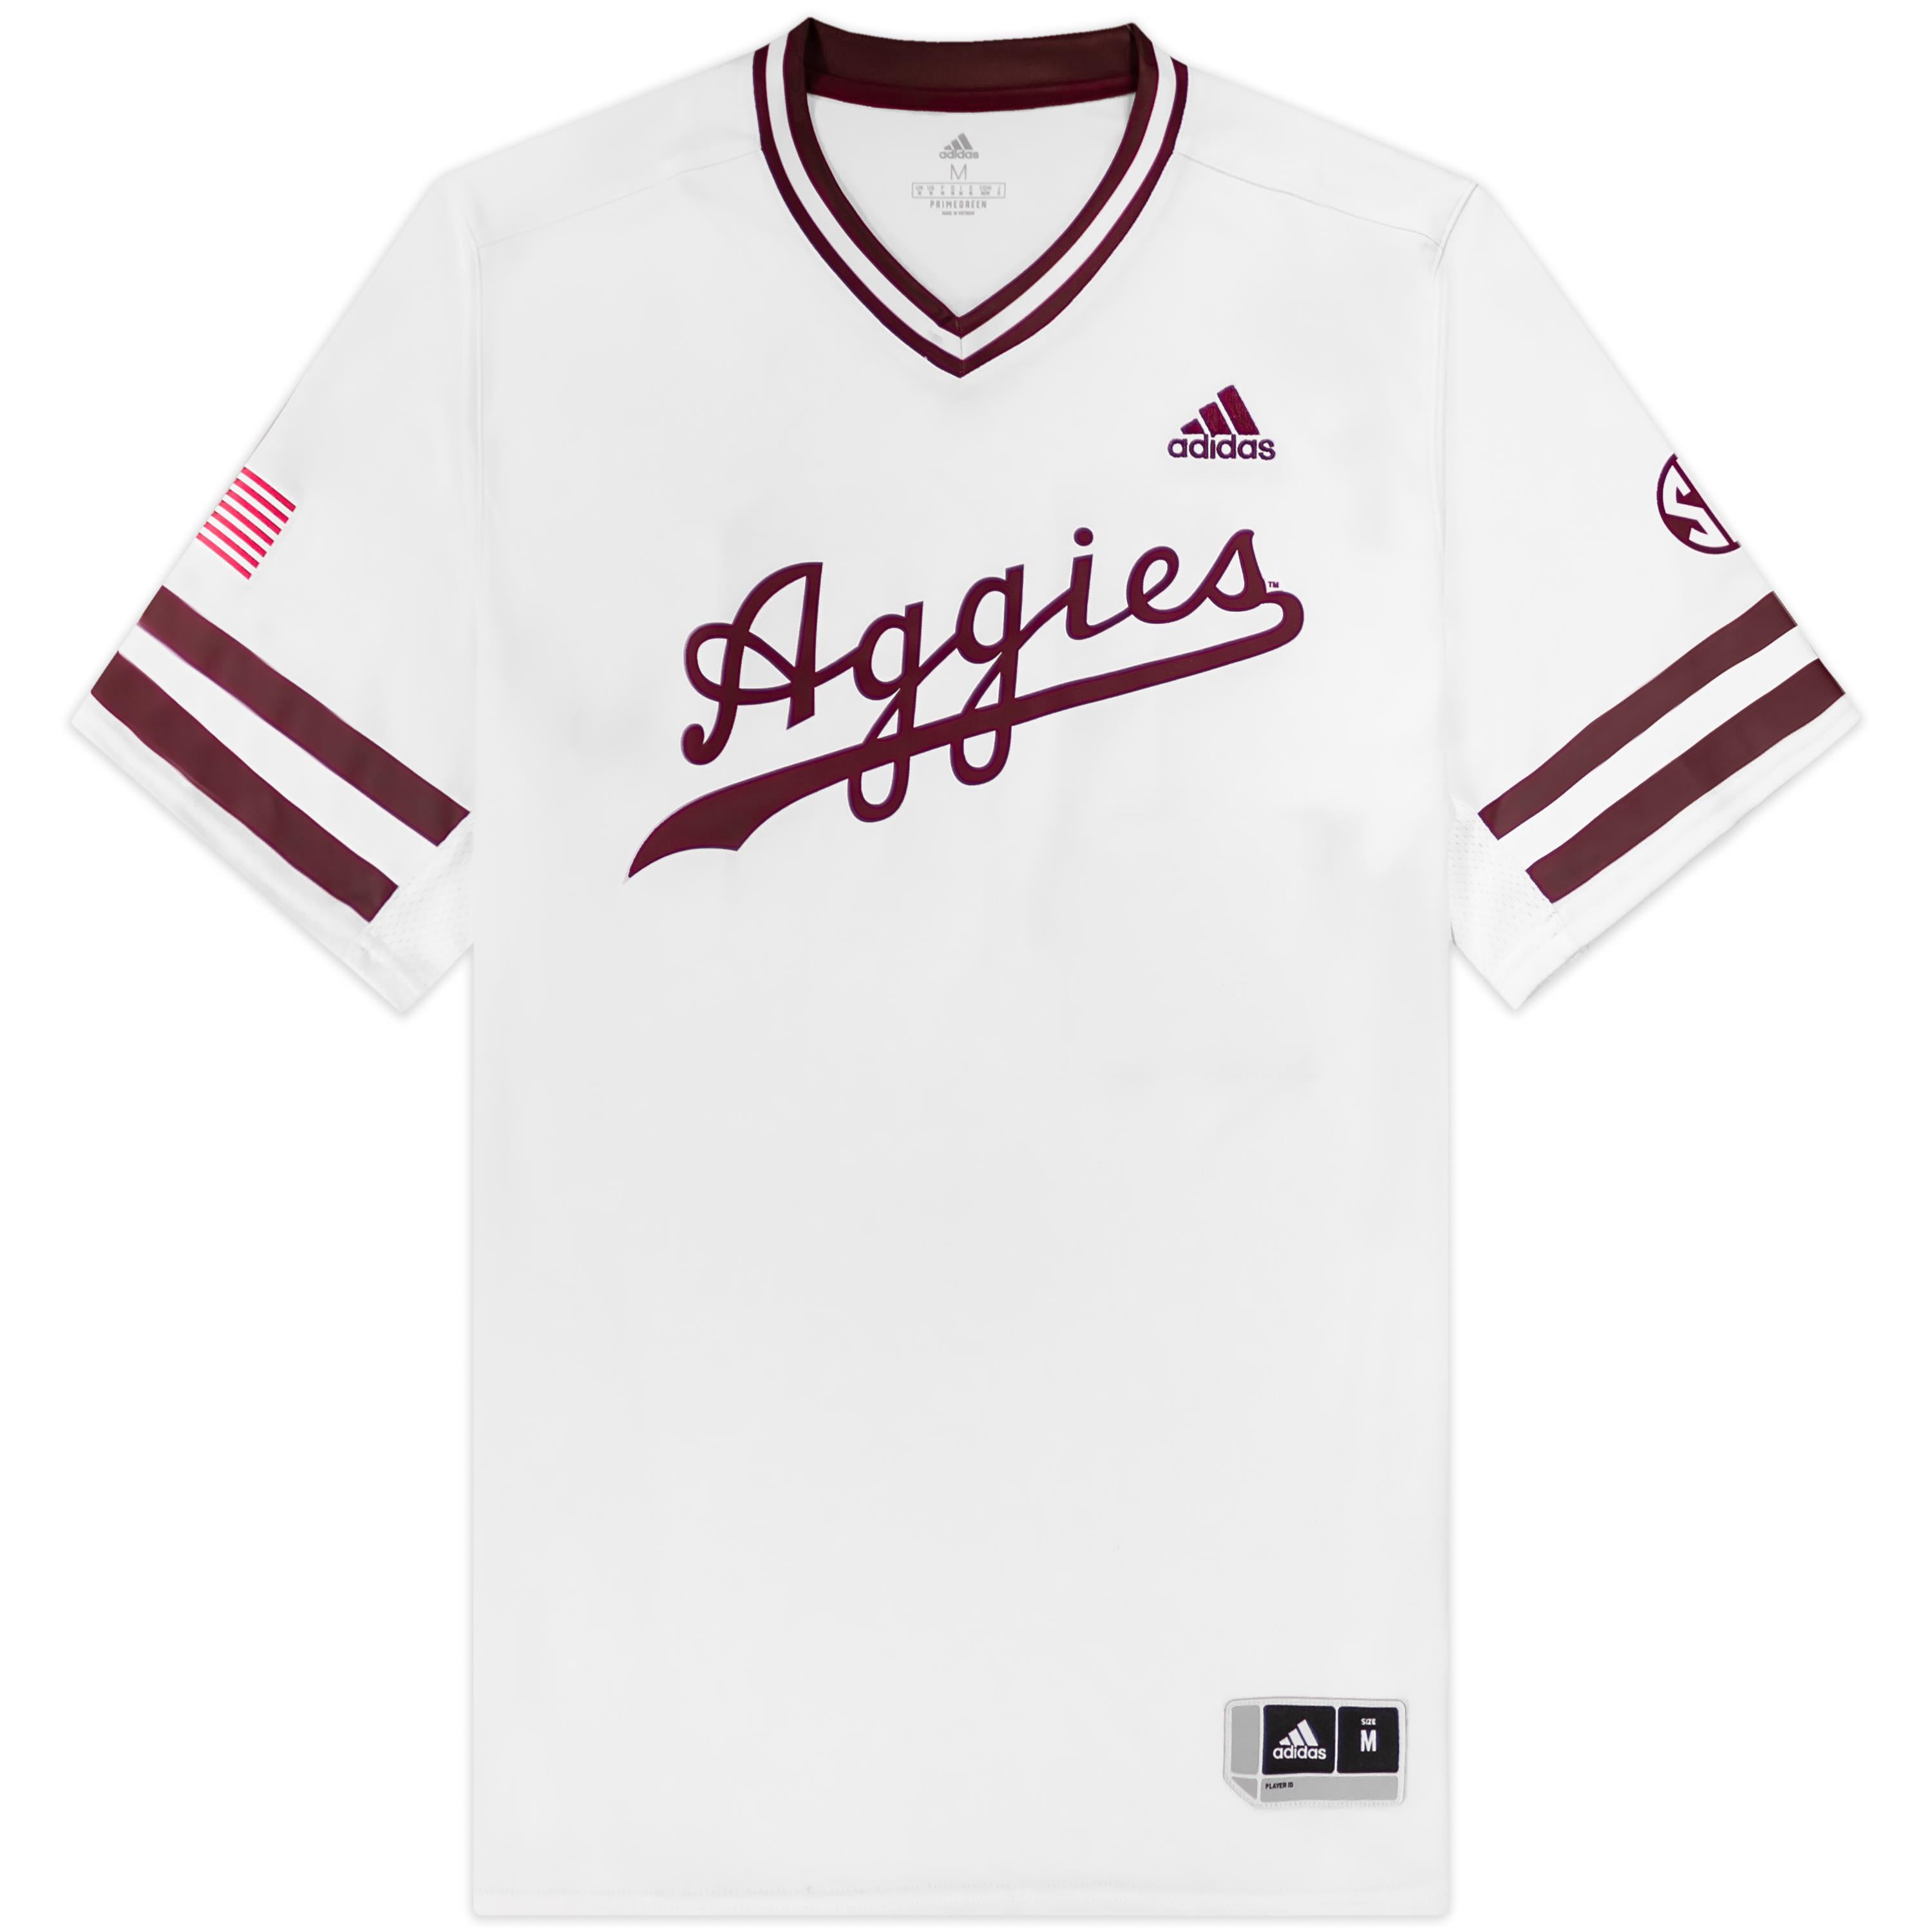 Aggies All Star Game - Baseball T-shirts